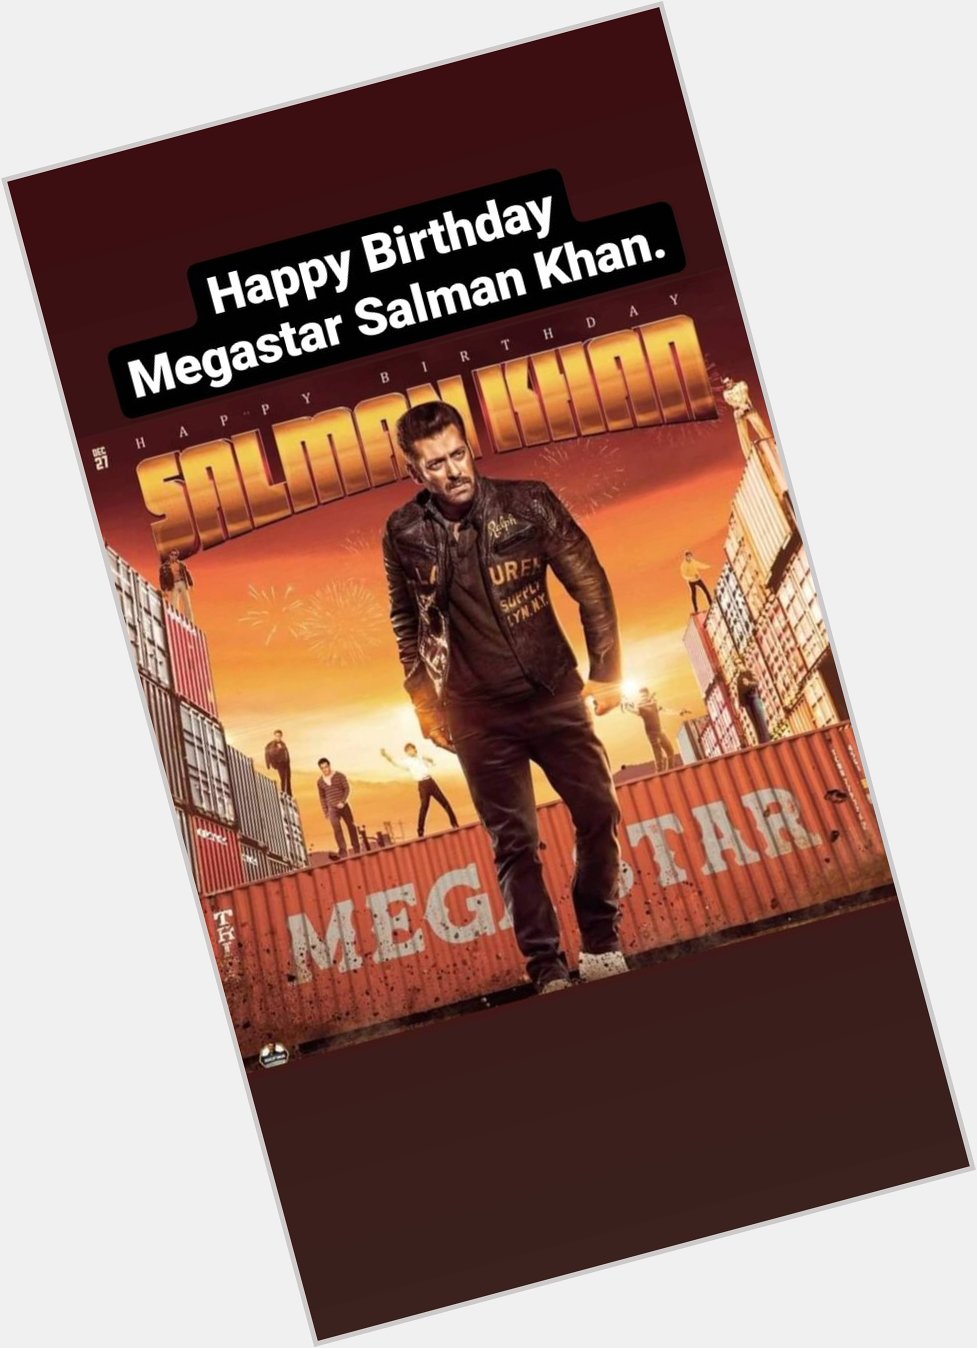  Happy 55th birthday to the Megastar Salman Khan . 